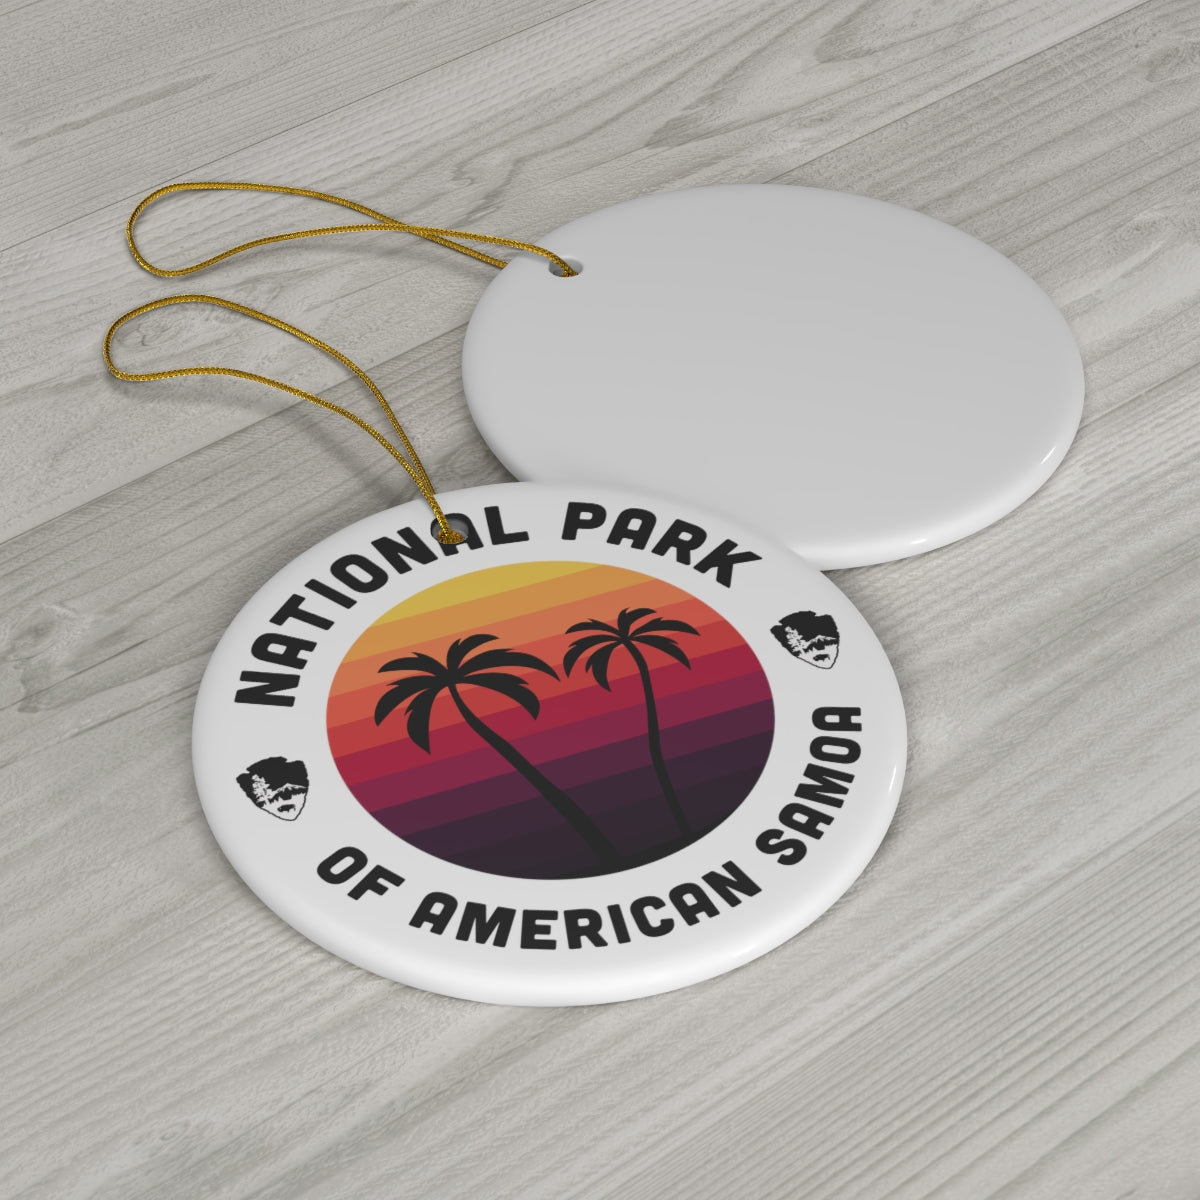 National Park of American Samoa Ornament - Round Emblem Design